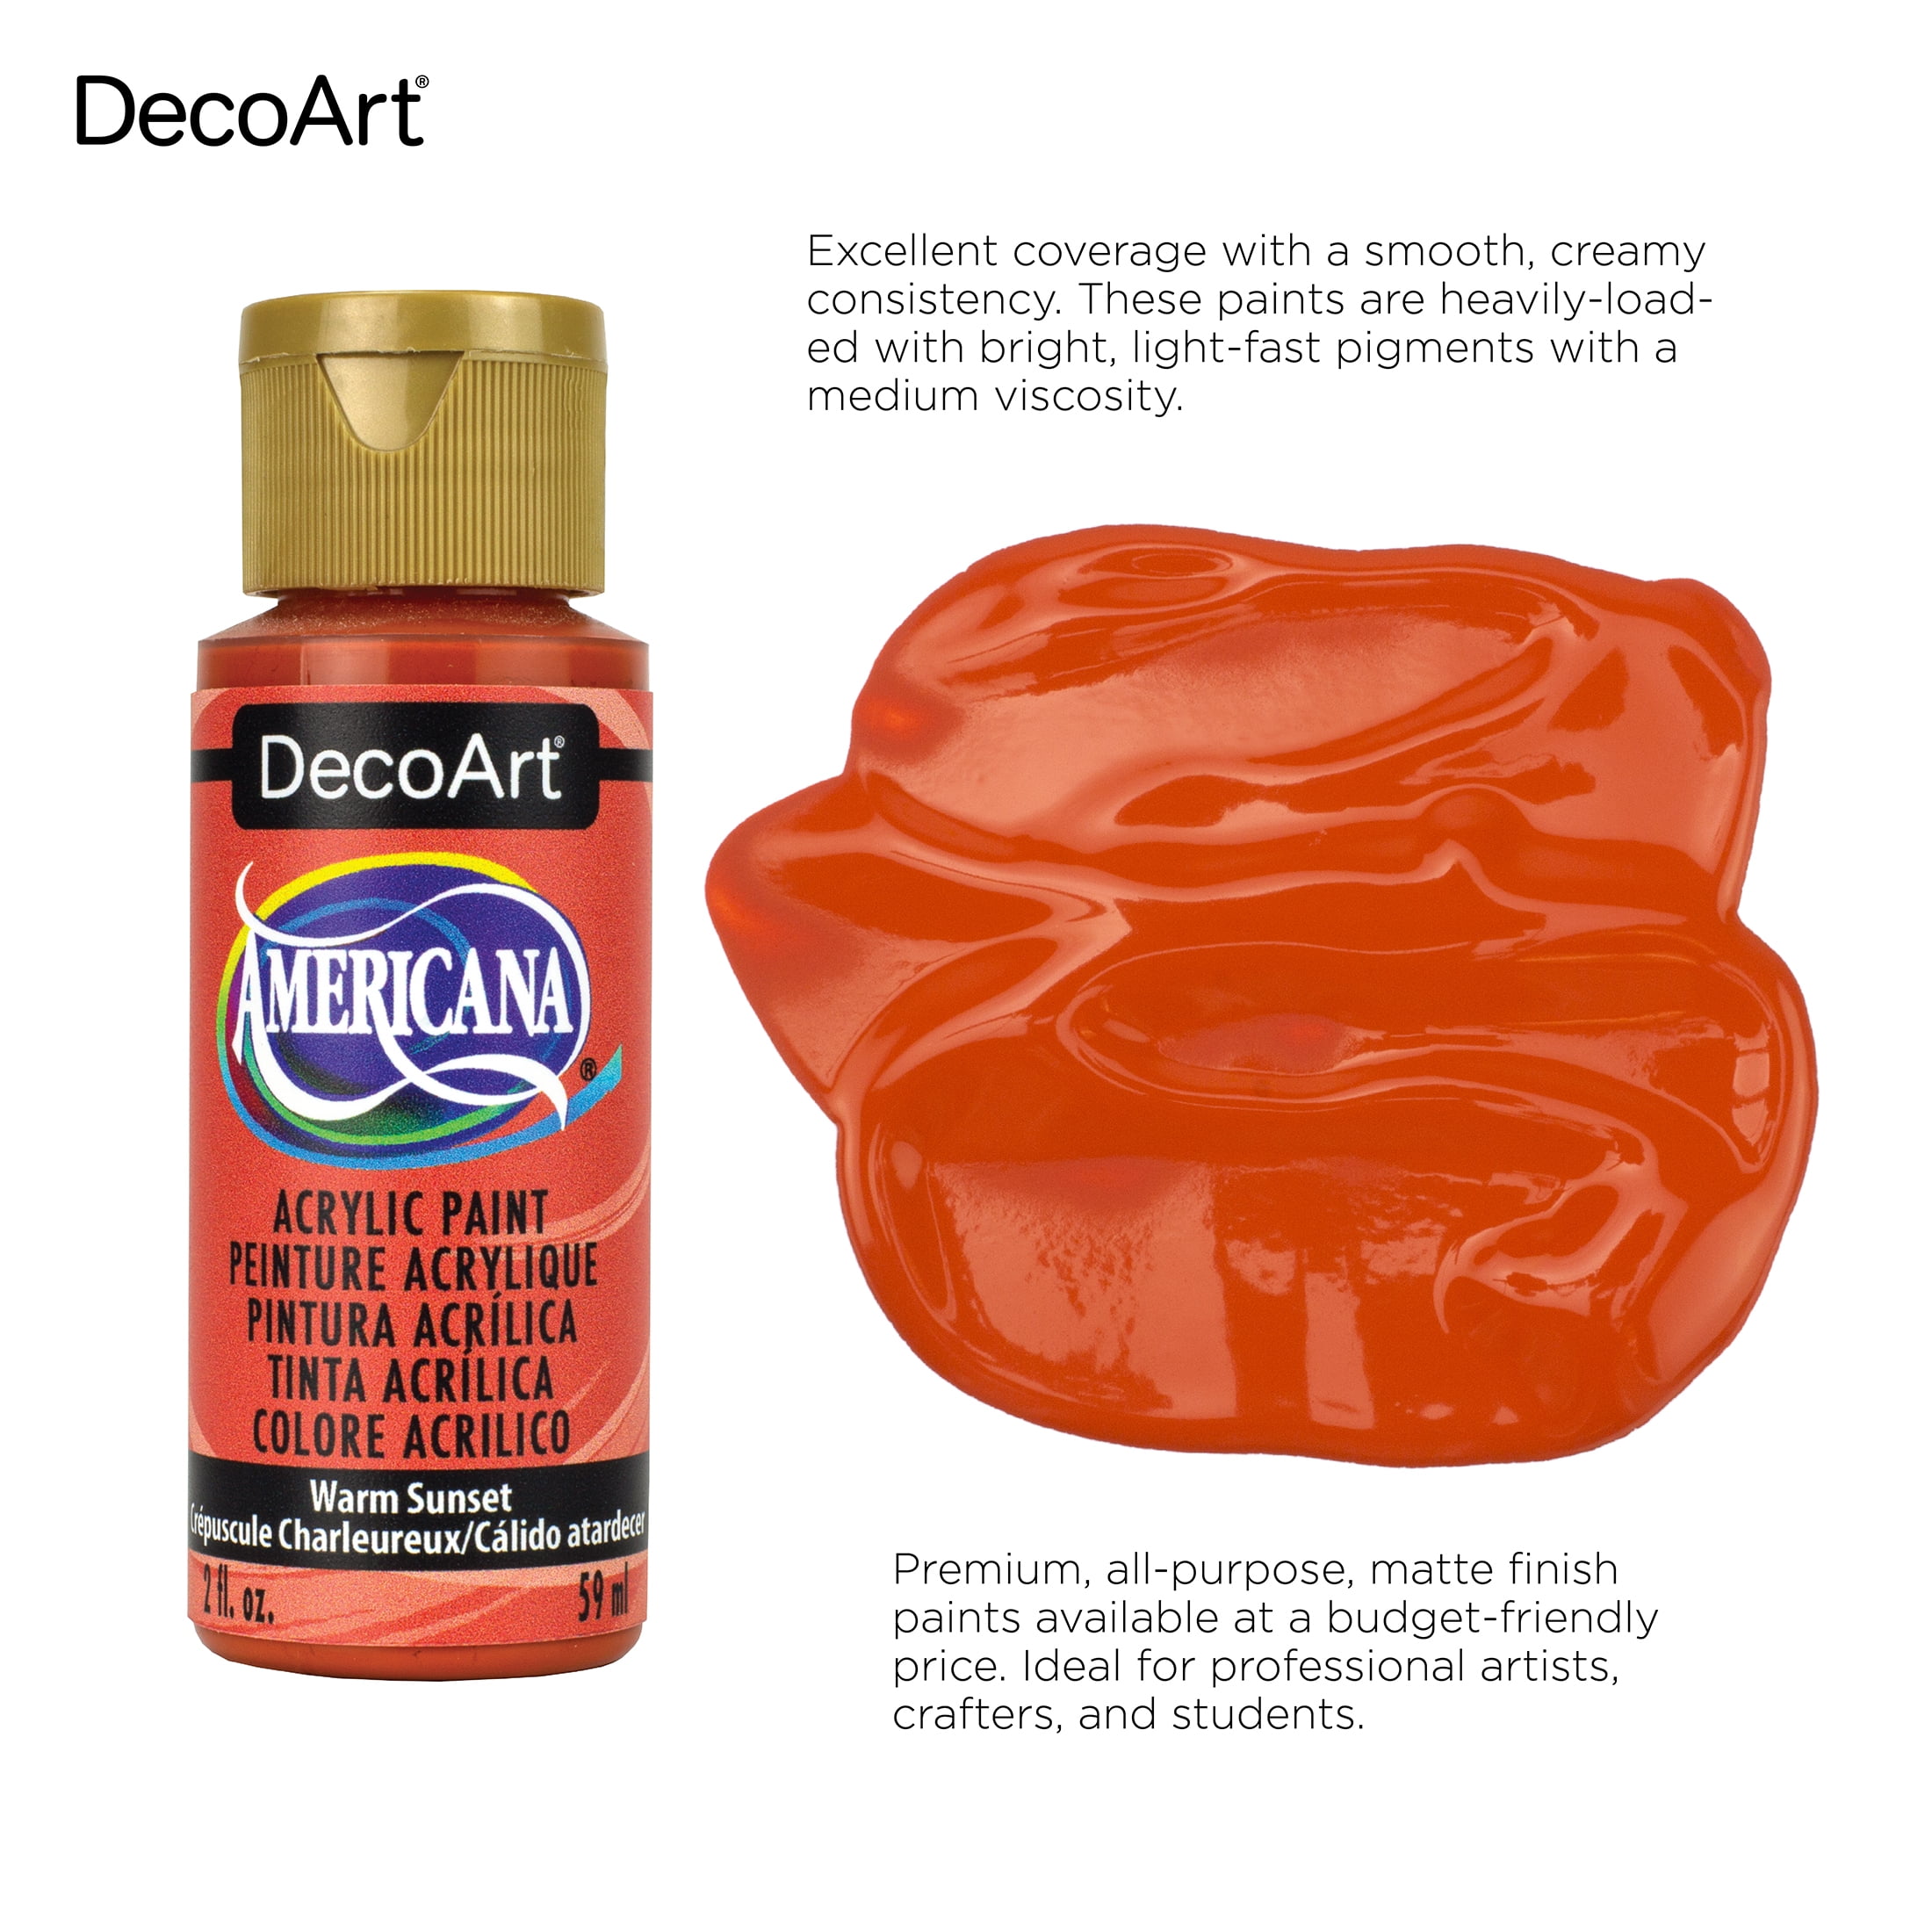 DecoArt Americana Acrylic Color, 2 oz. Bottle, Blue Raspberry